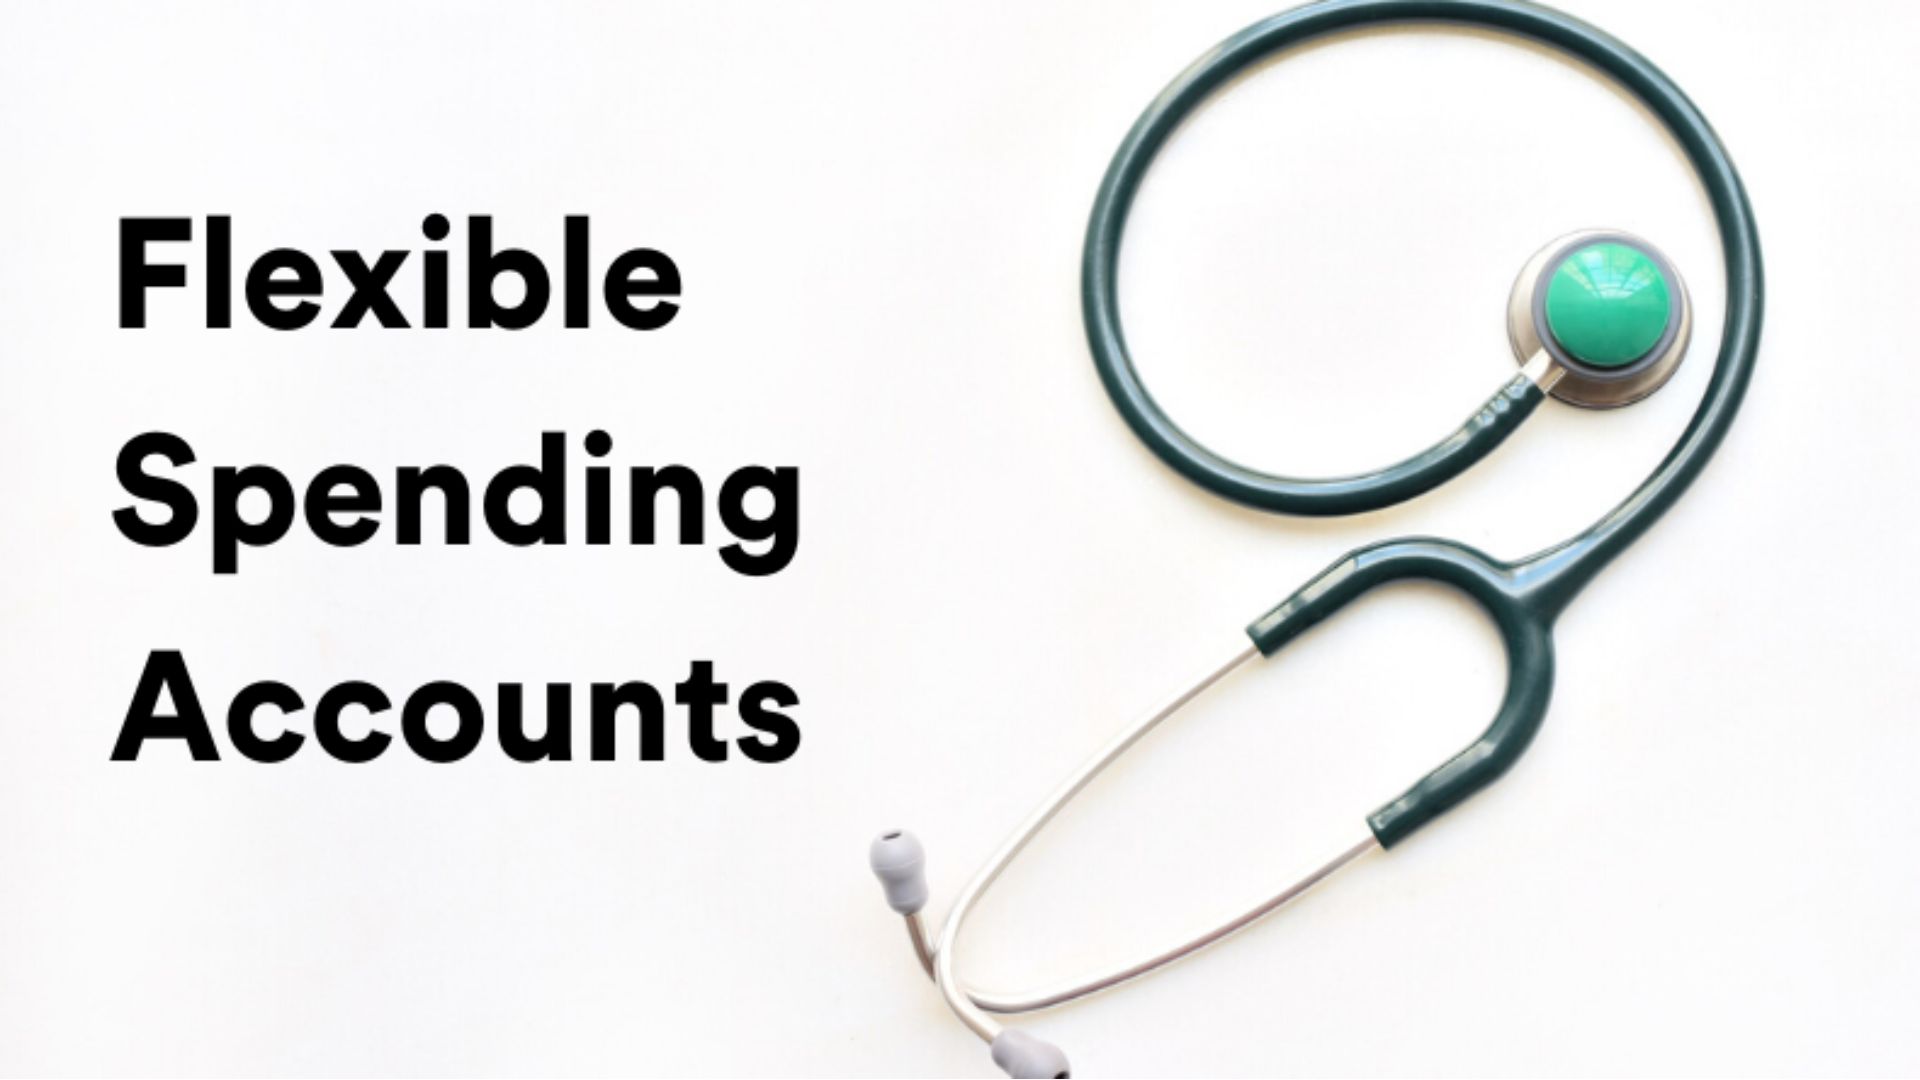 Flexible Spending Accounts (FSAs).